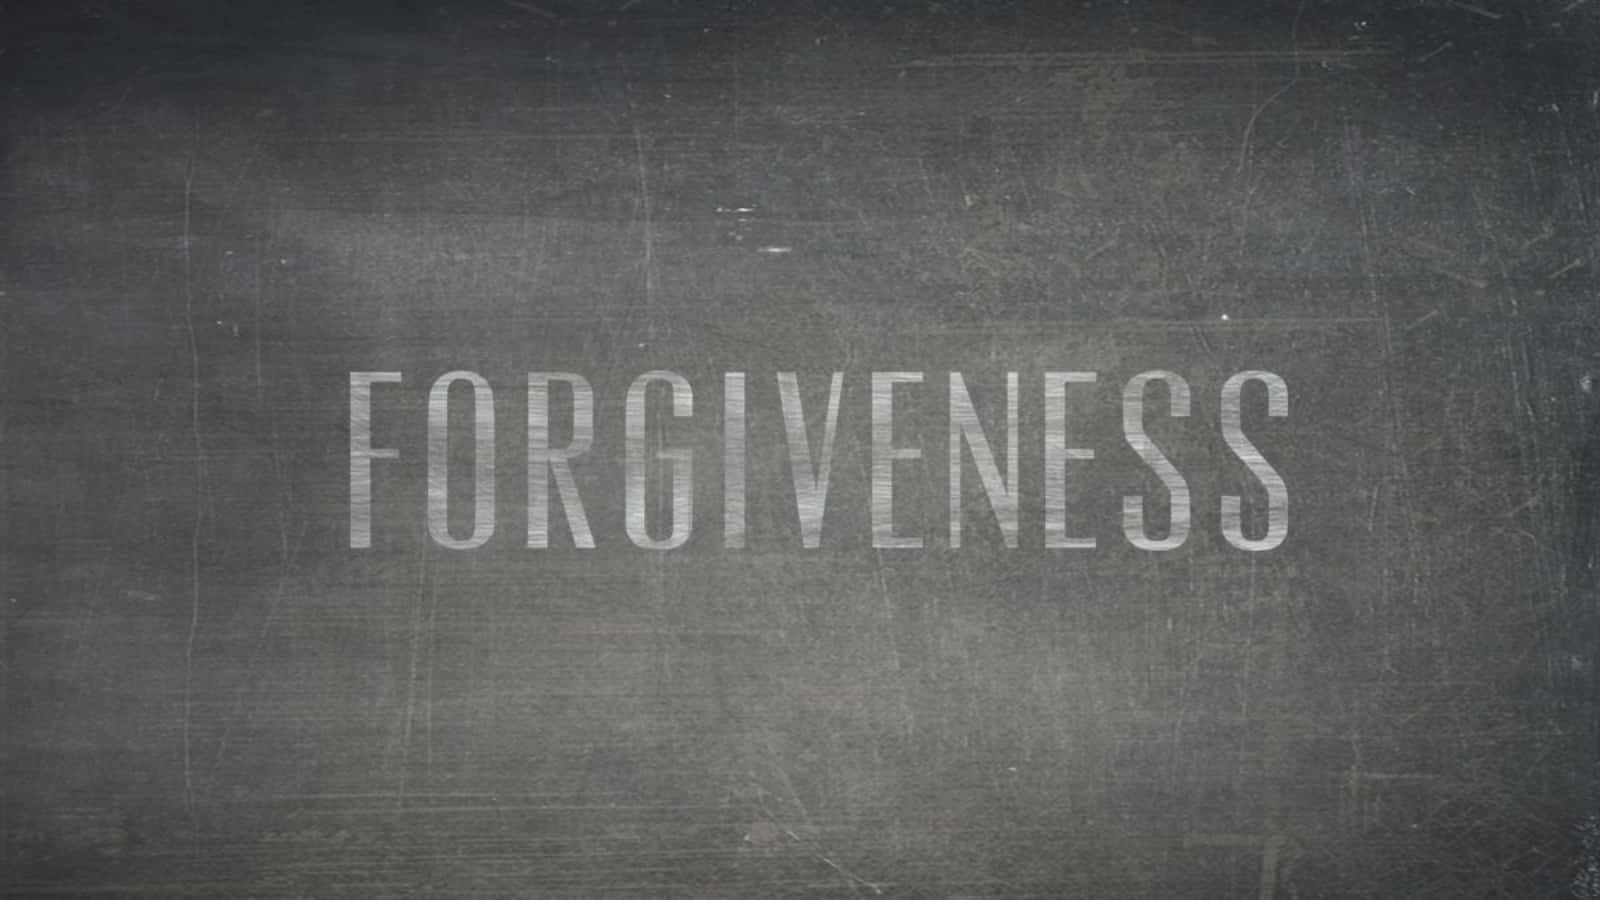 Forgiveness On A Blackboard